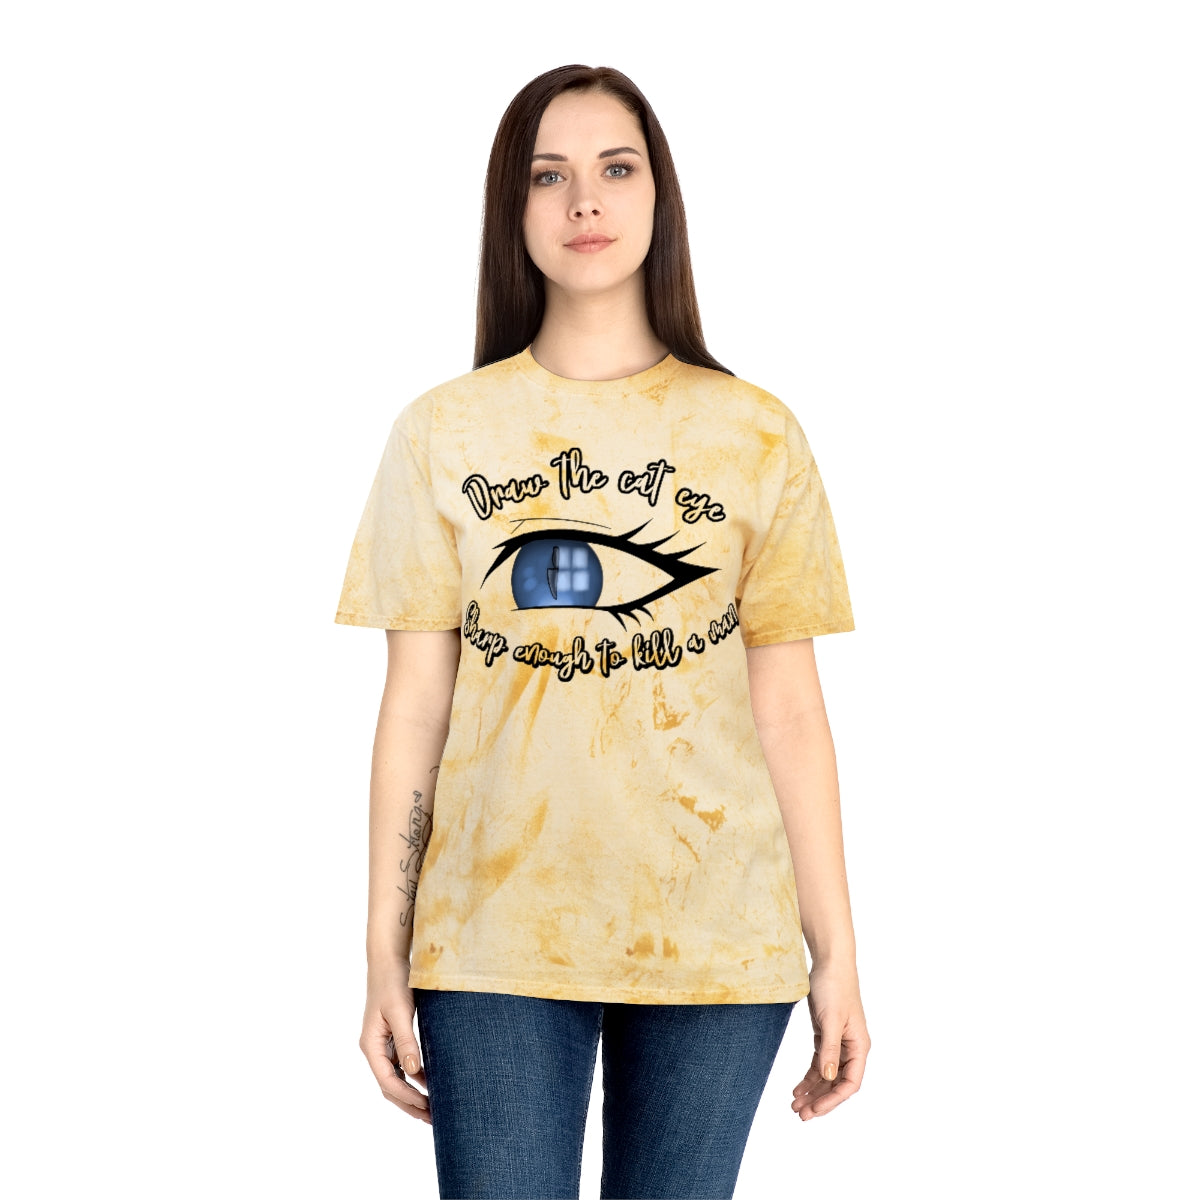 Taylor Swift Lyrics T-Shirt | Midnight Shirt | Draw the cat eye sharp enough | Swifties Shirt | Eras Tour Shirt